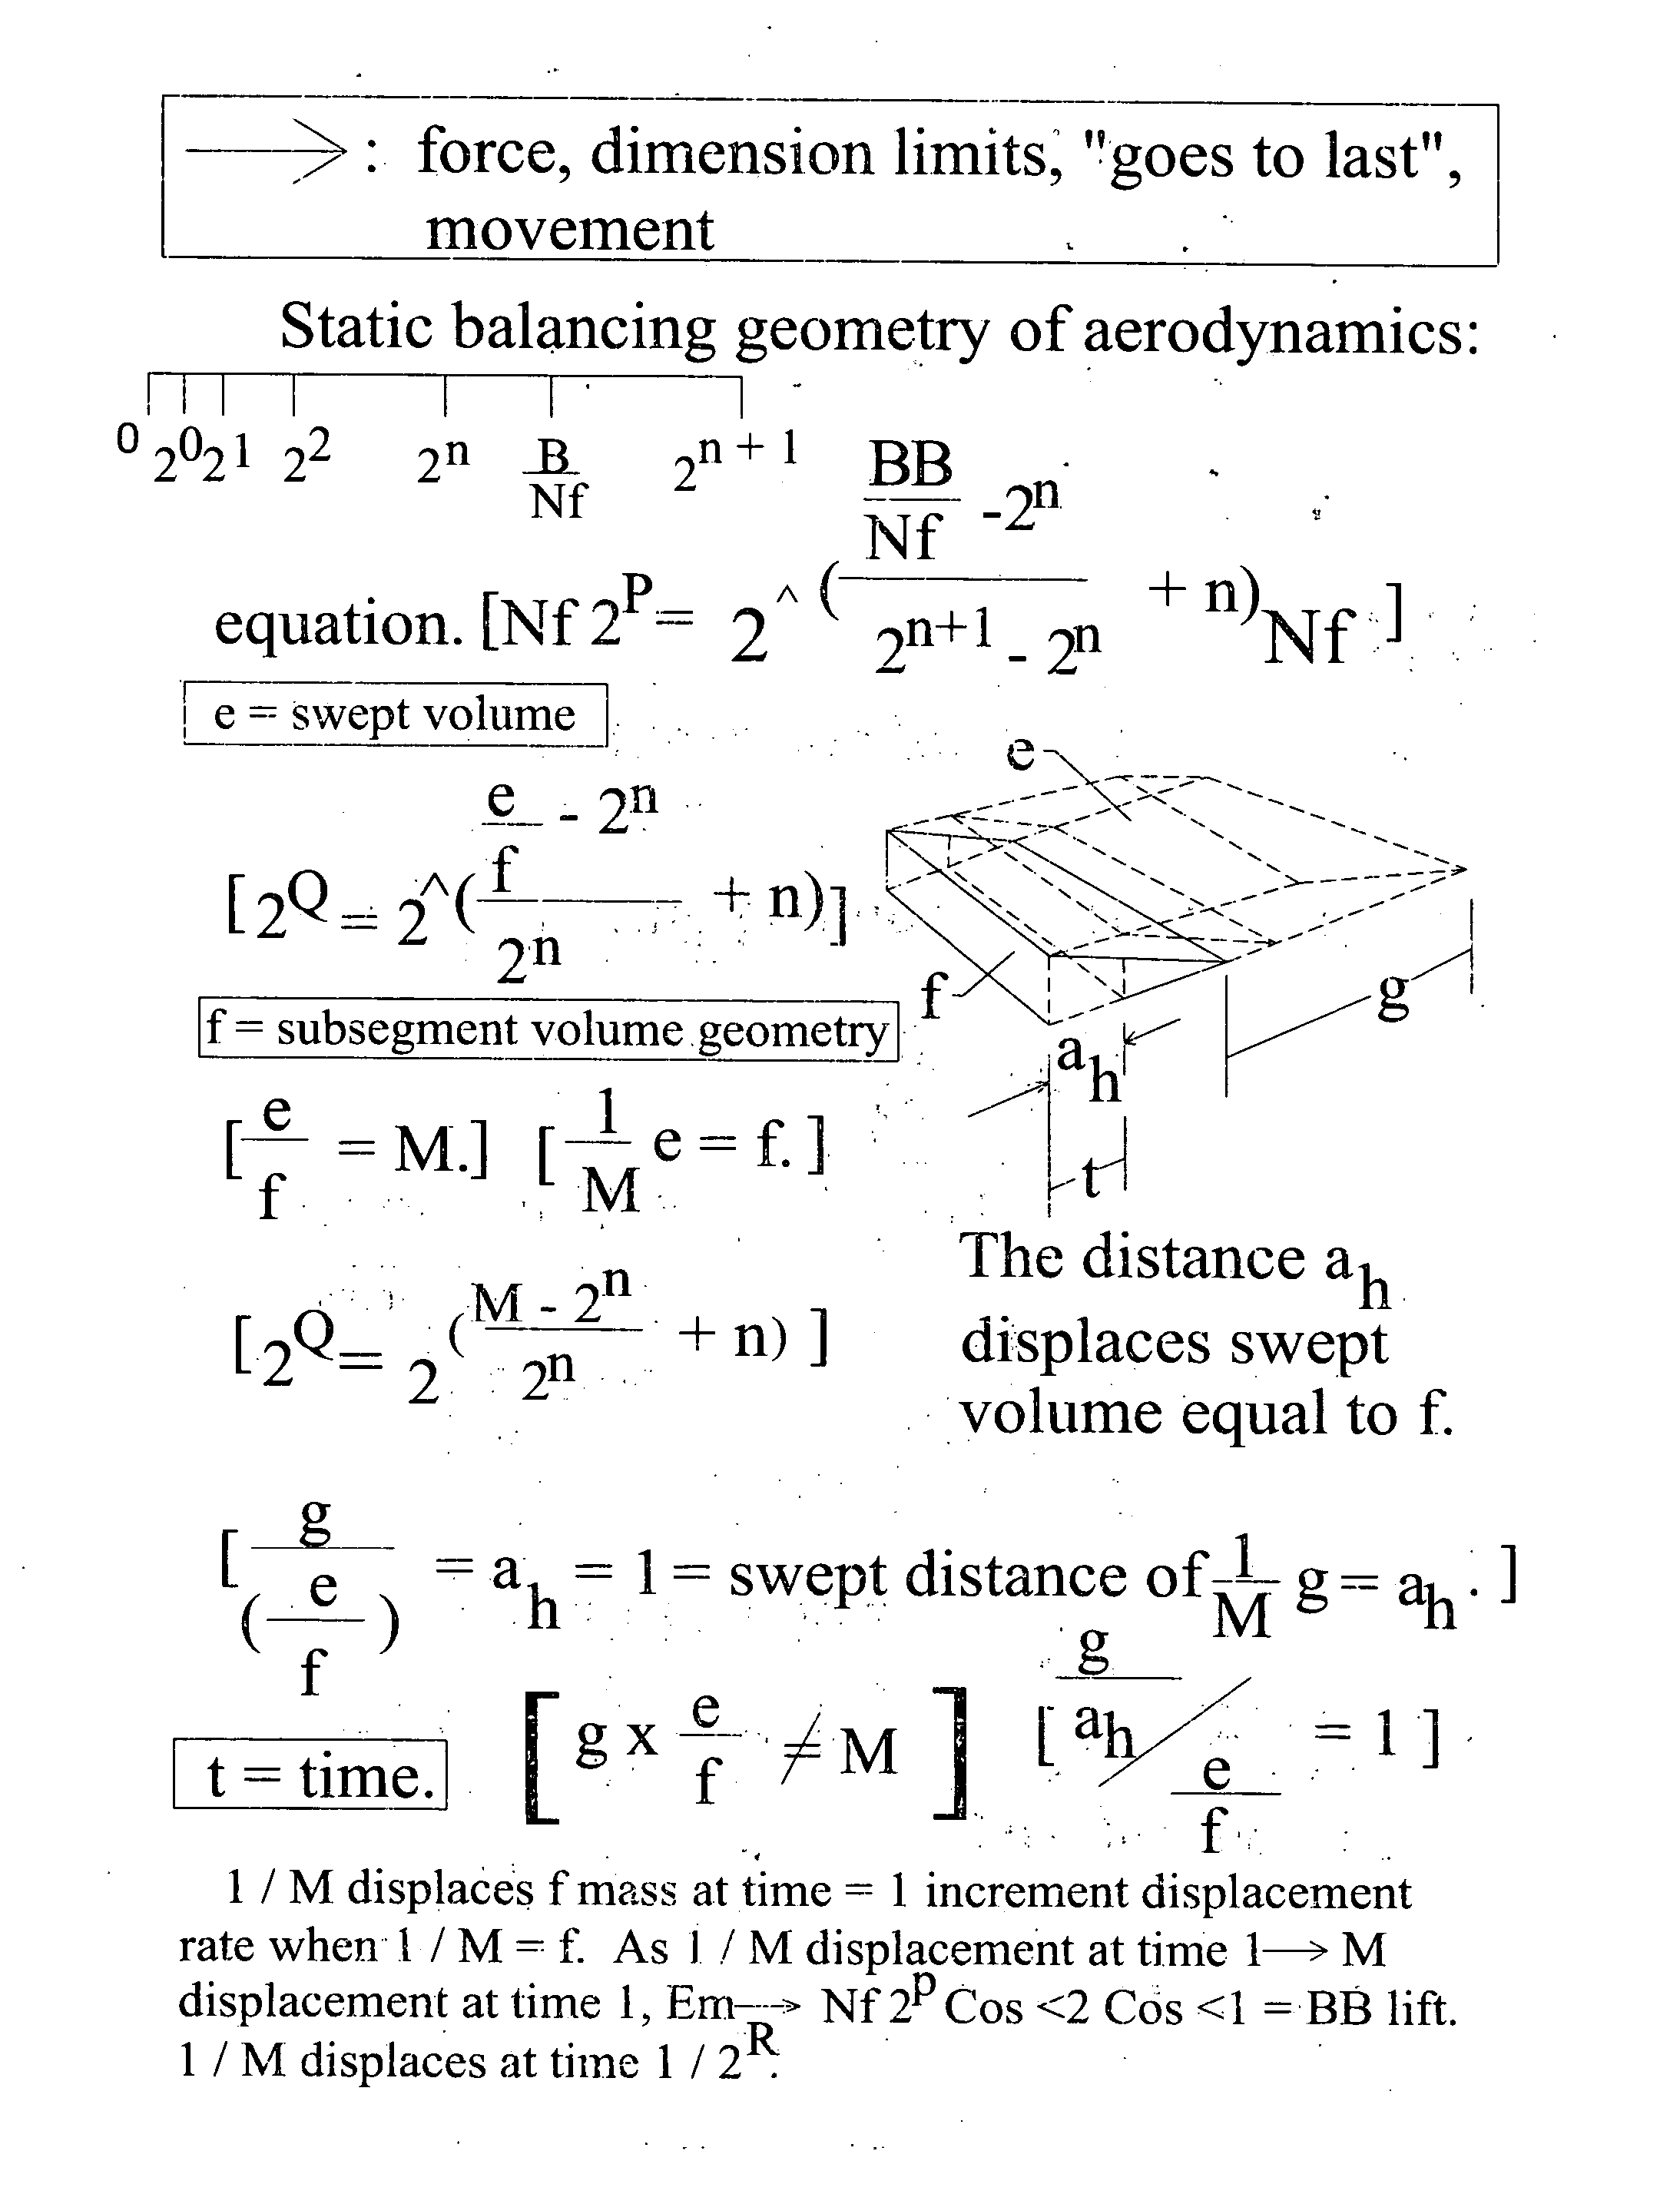 Fluid mechanics of inertia, or acceleration mechanics, or simplified calculus